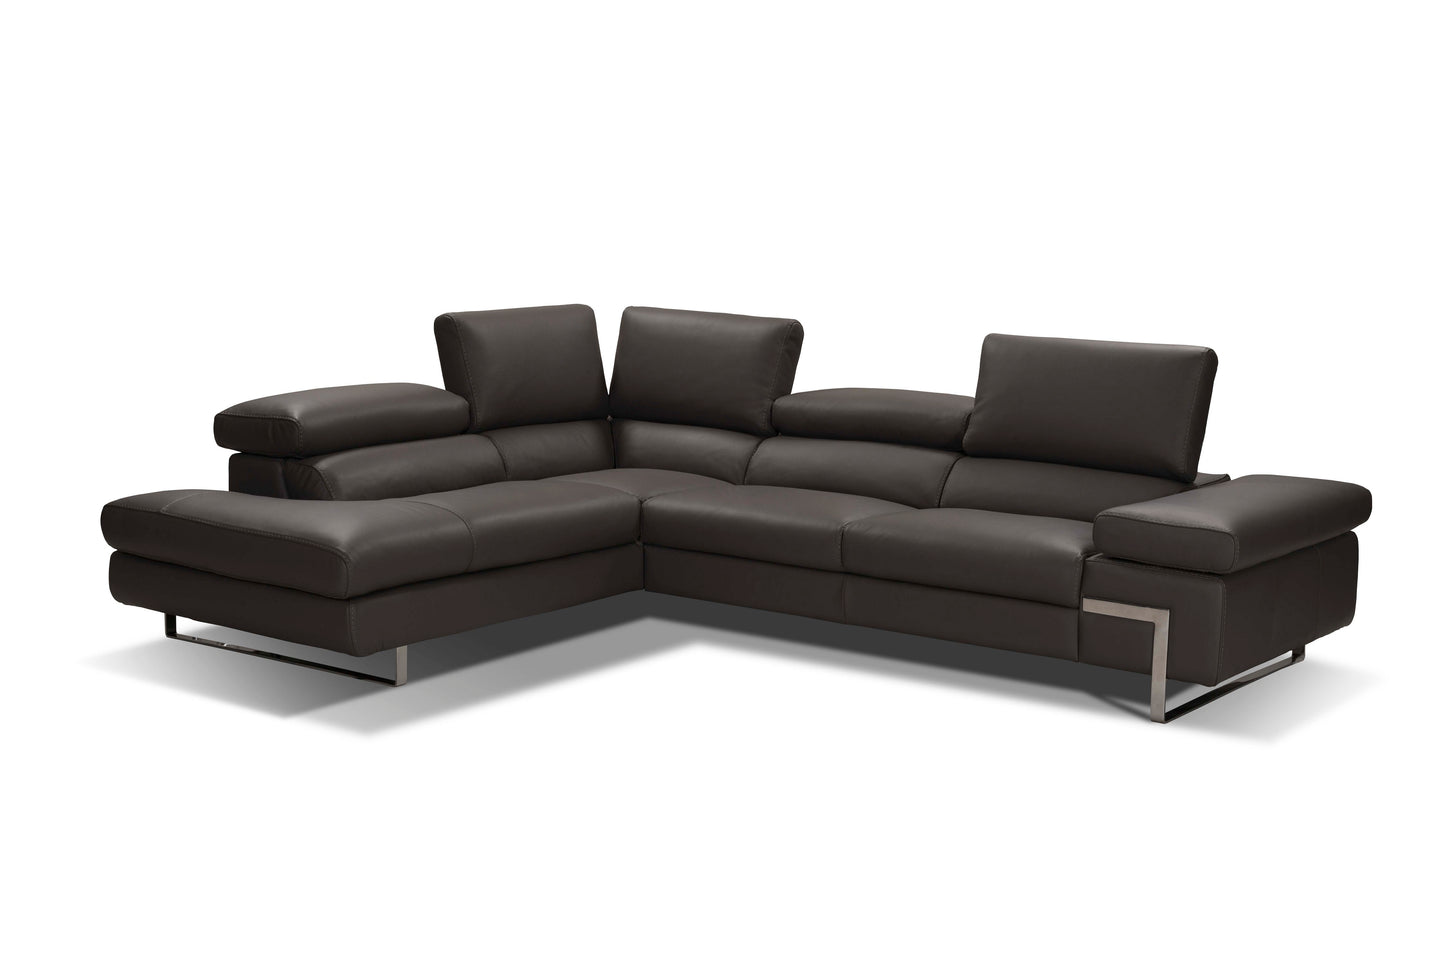 Atelier Italiana I716 Gray Sectional Sofa Left Facing Chaise by Incanto